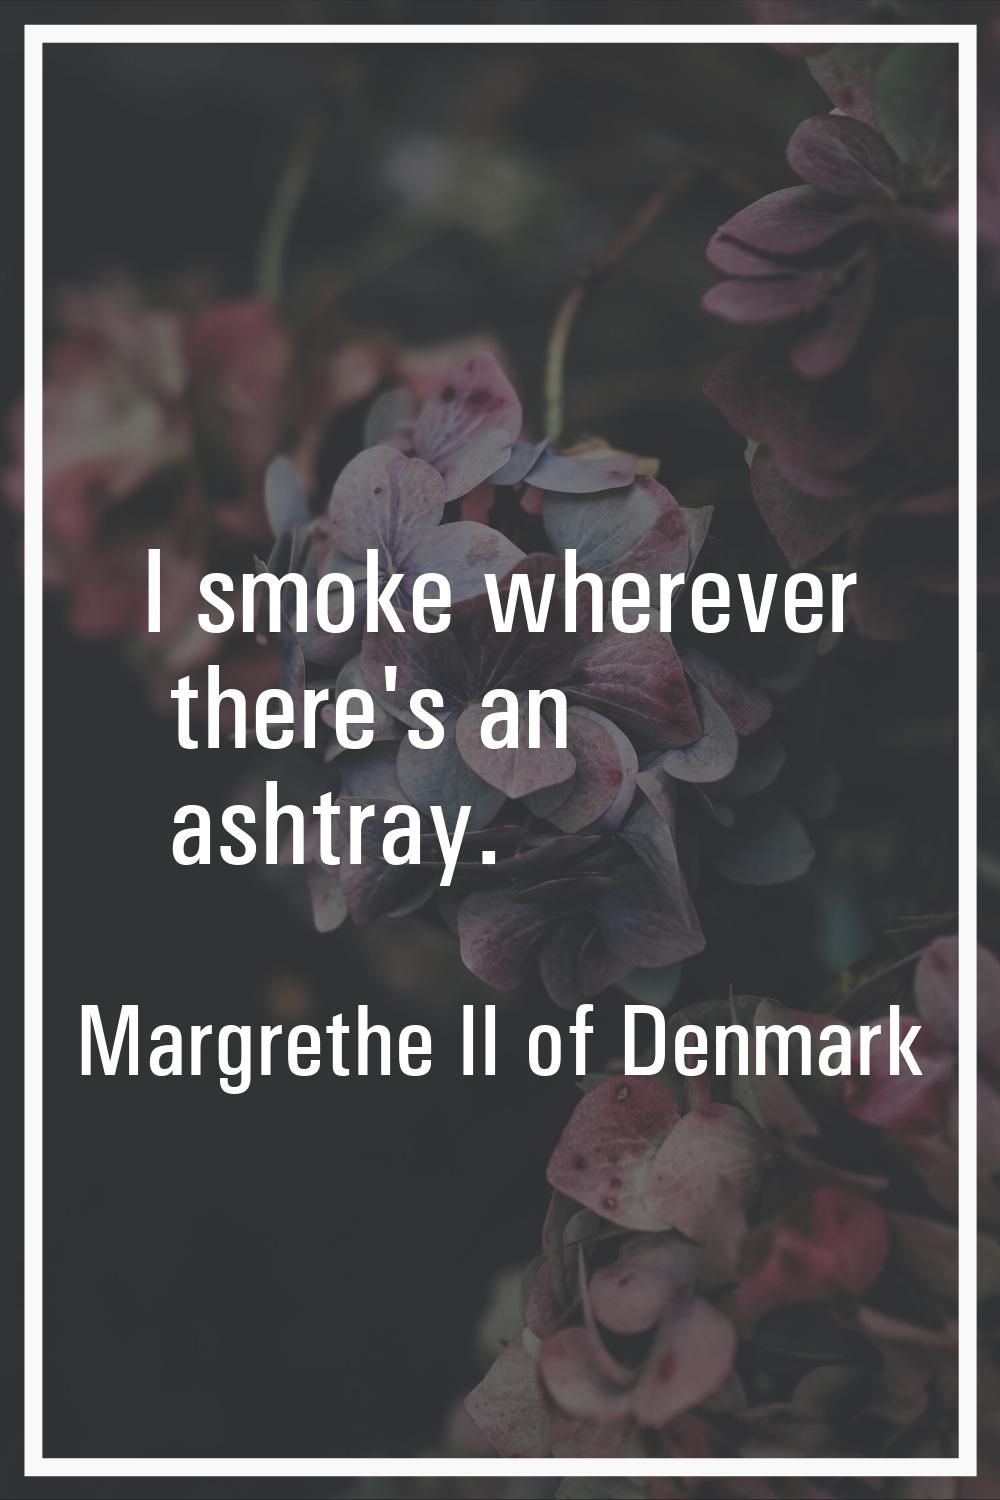 I smoke wherever there's an ashtray.